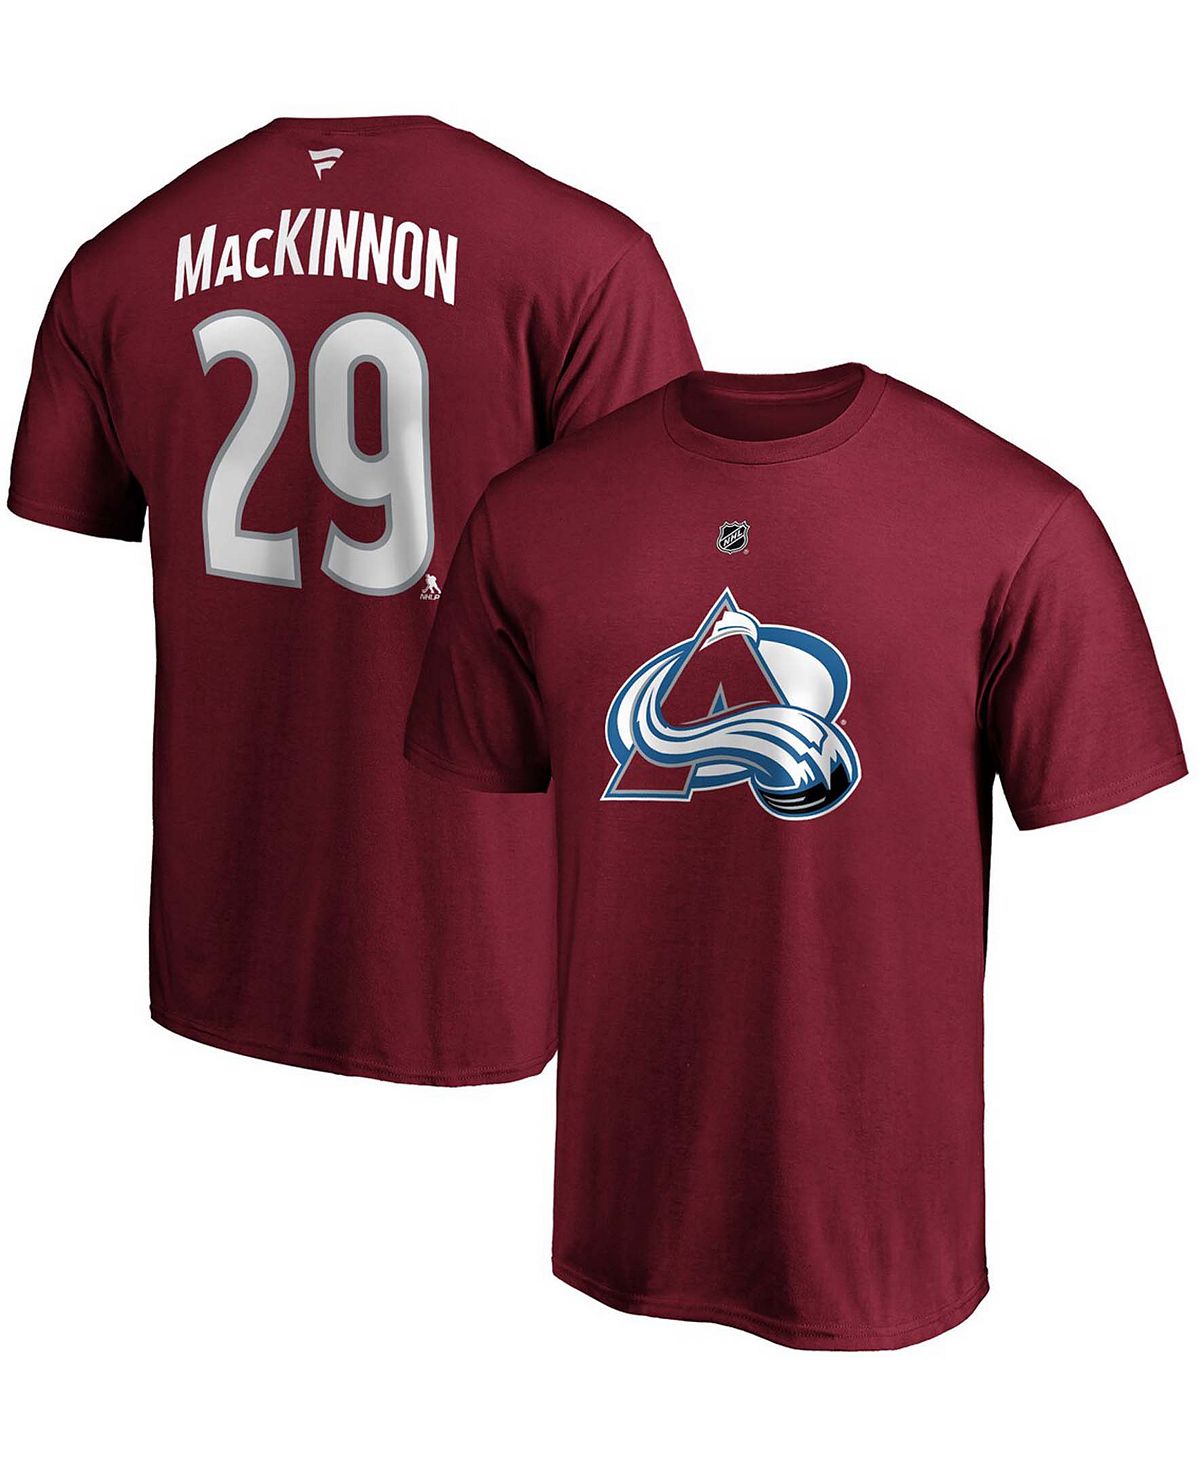 Фирменная мужская футболка nathan mackinnon burgundy colorado avalanche team authentic stack name & number Fanatics